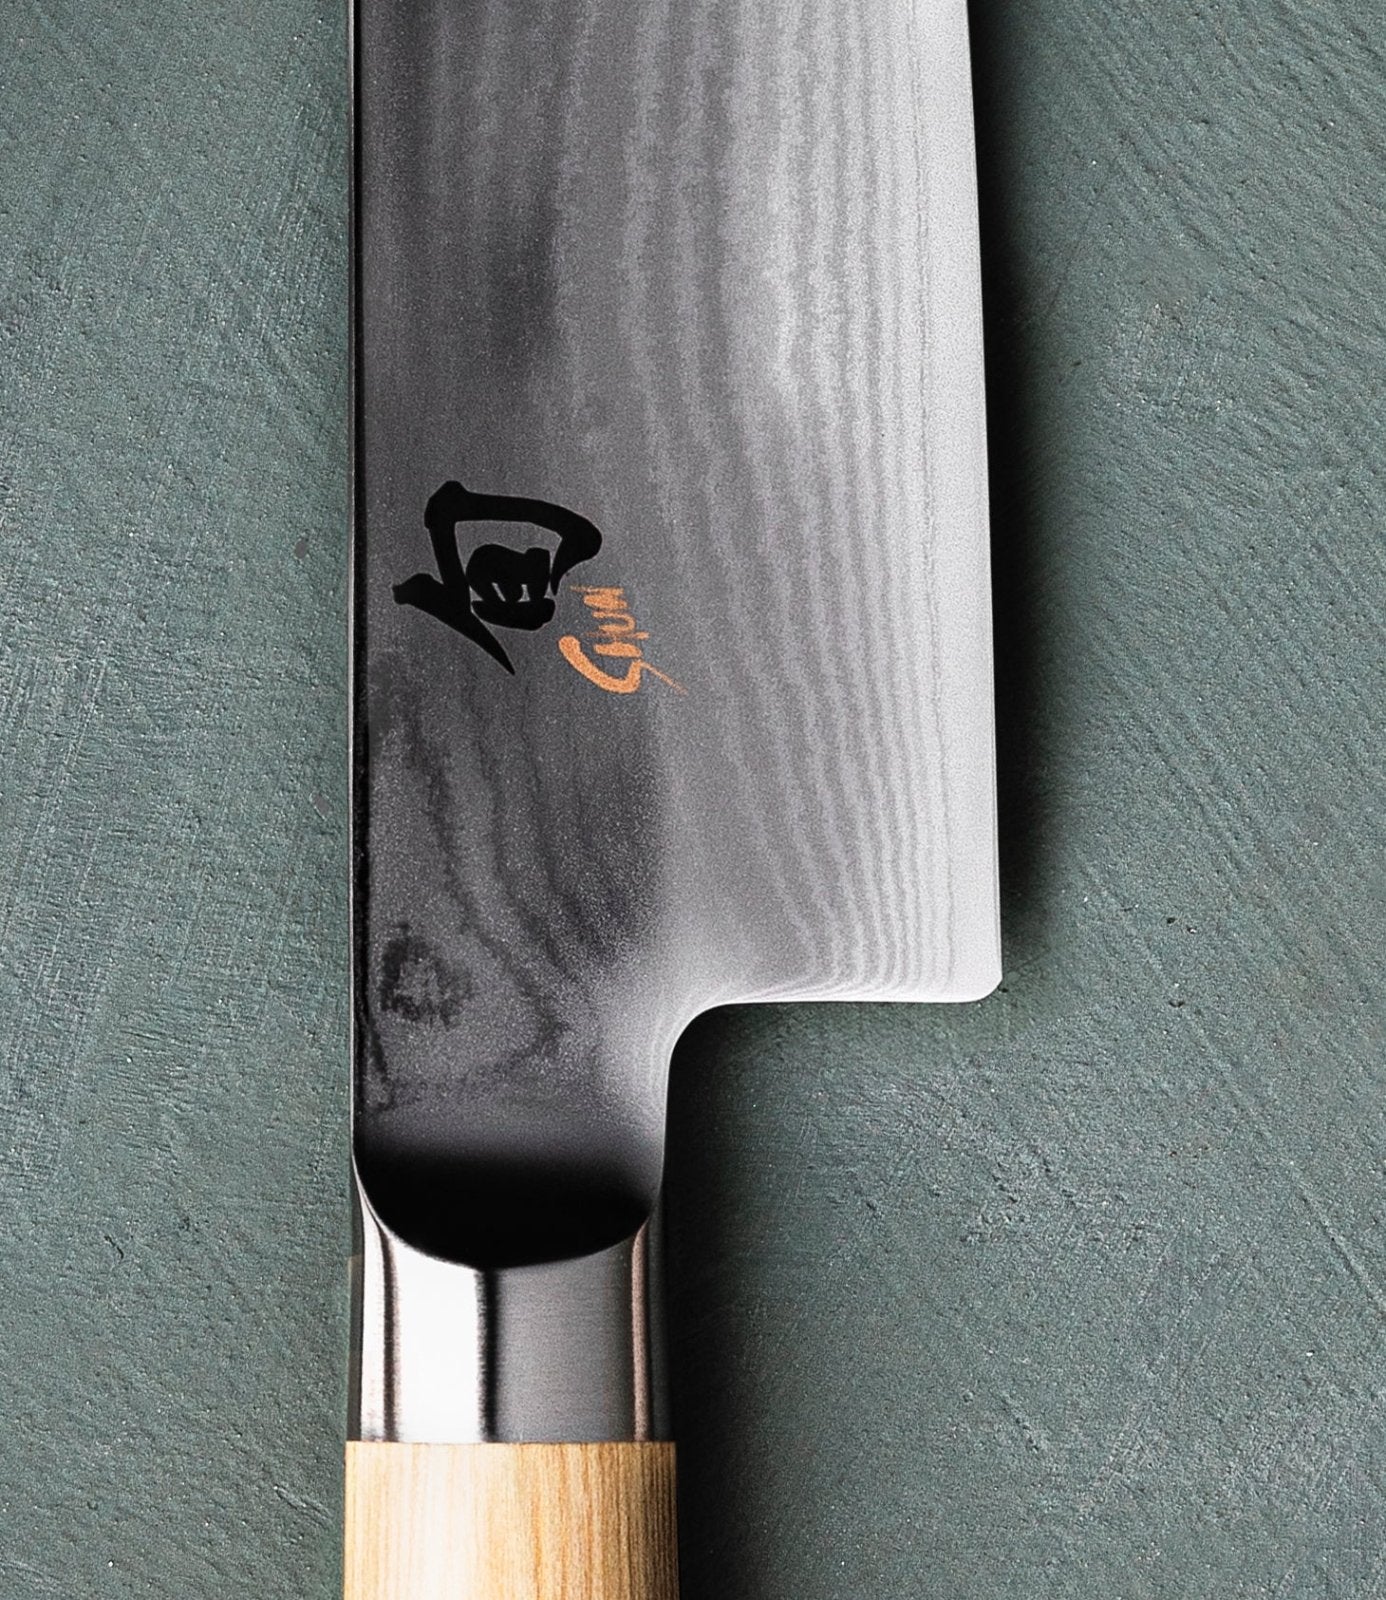 KAI Shun White 18cm Santoku Knife - KAI-DM-0702W - The Cotswold Knife Company